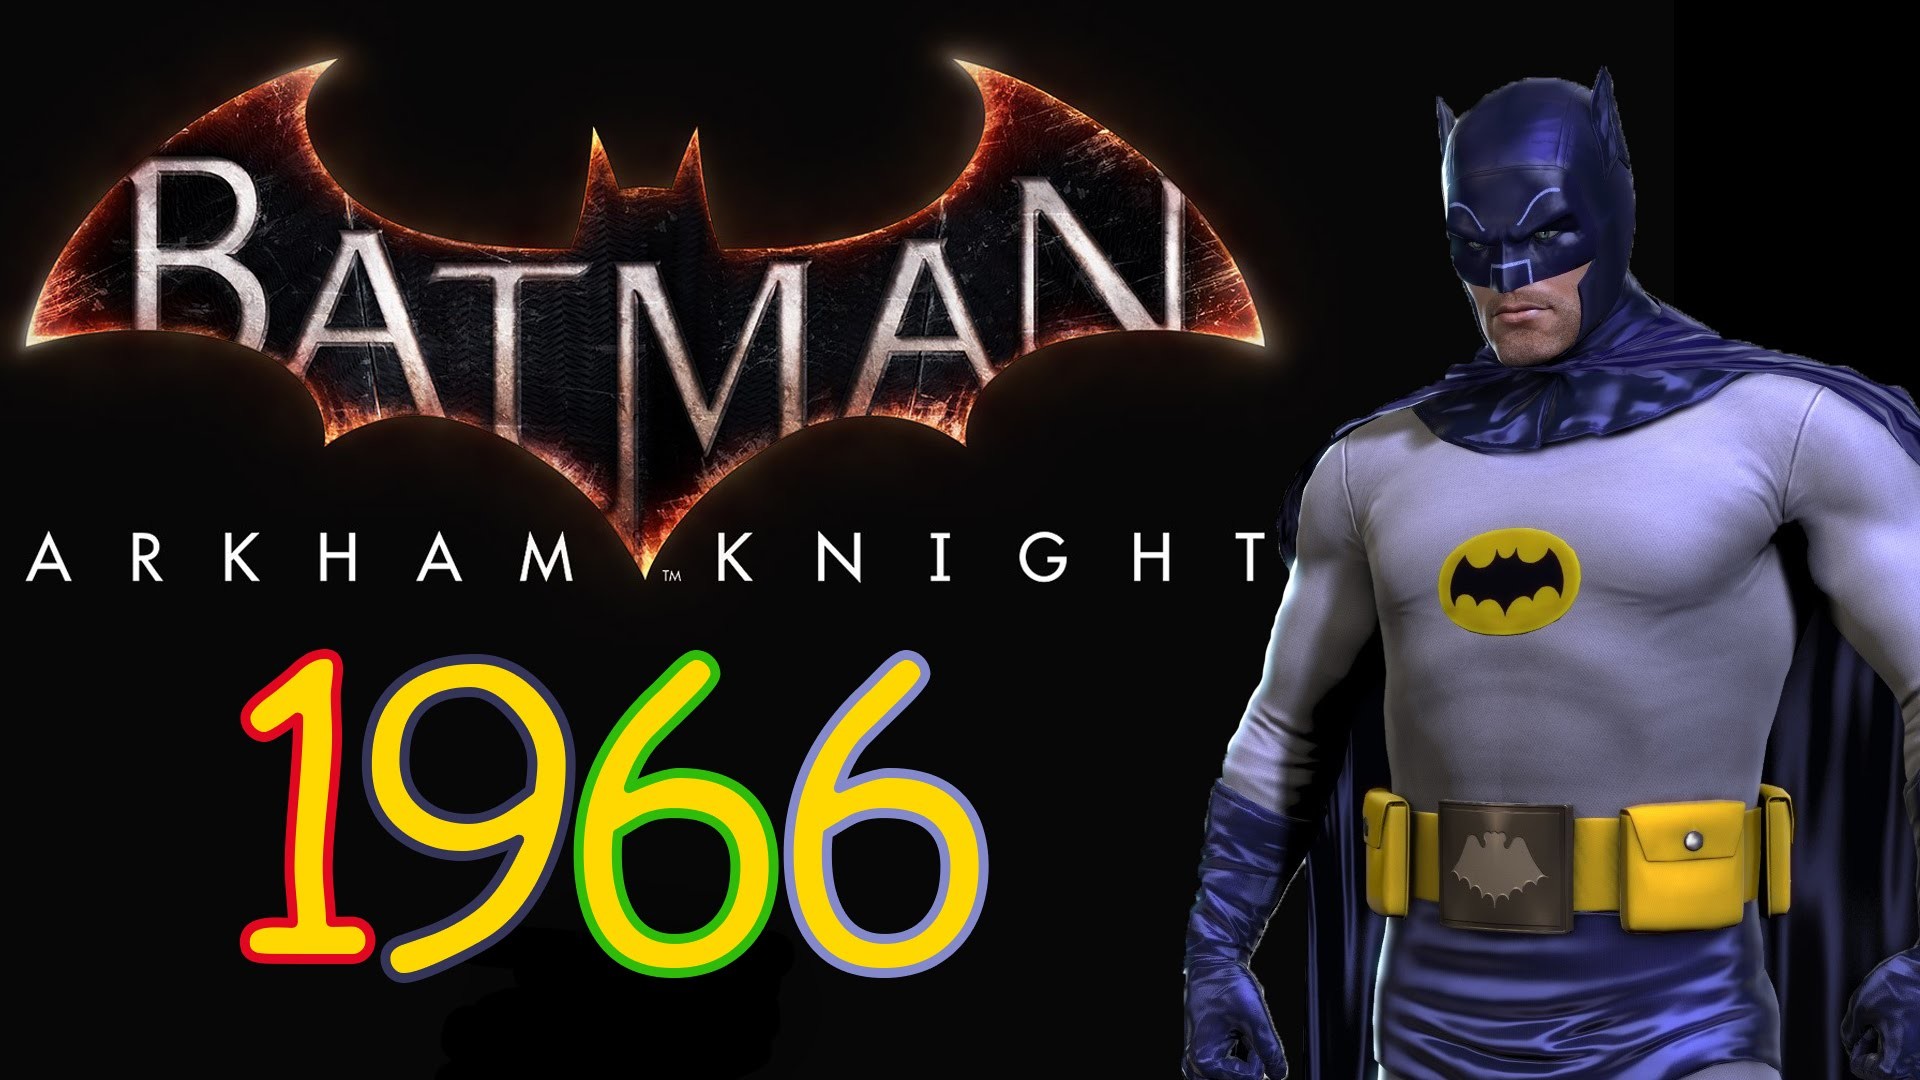 Batman Arkham Knight – 1966